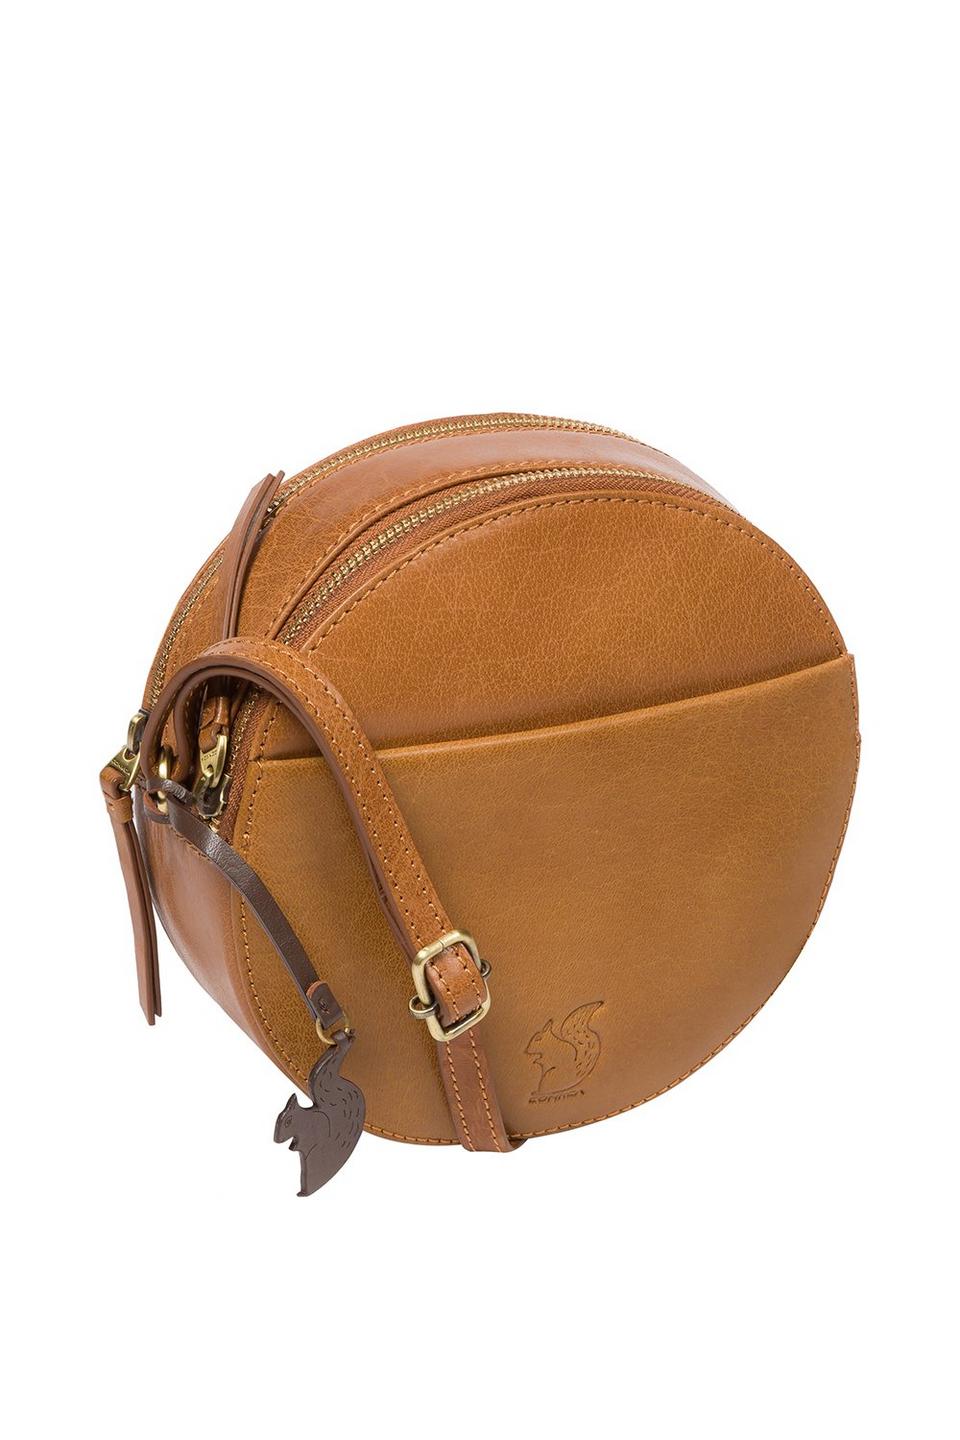 Bags & Purses | 'Rolla' Leather Cross Body Bag | Conkca London